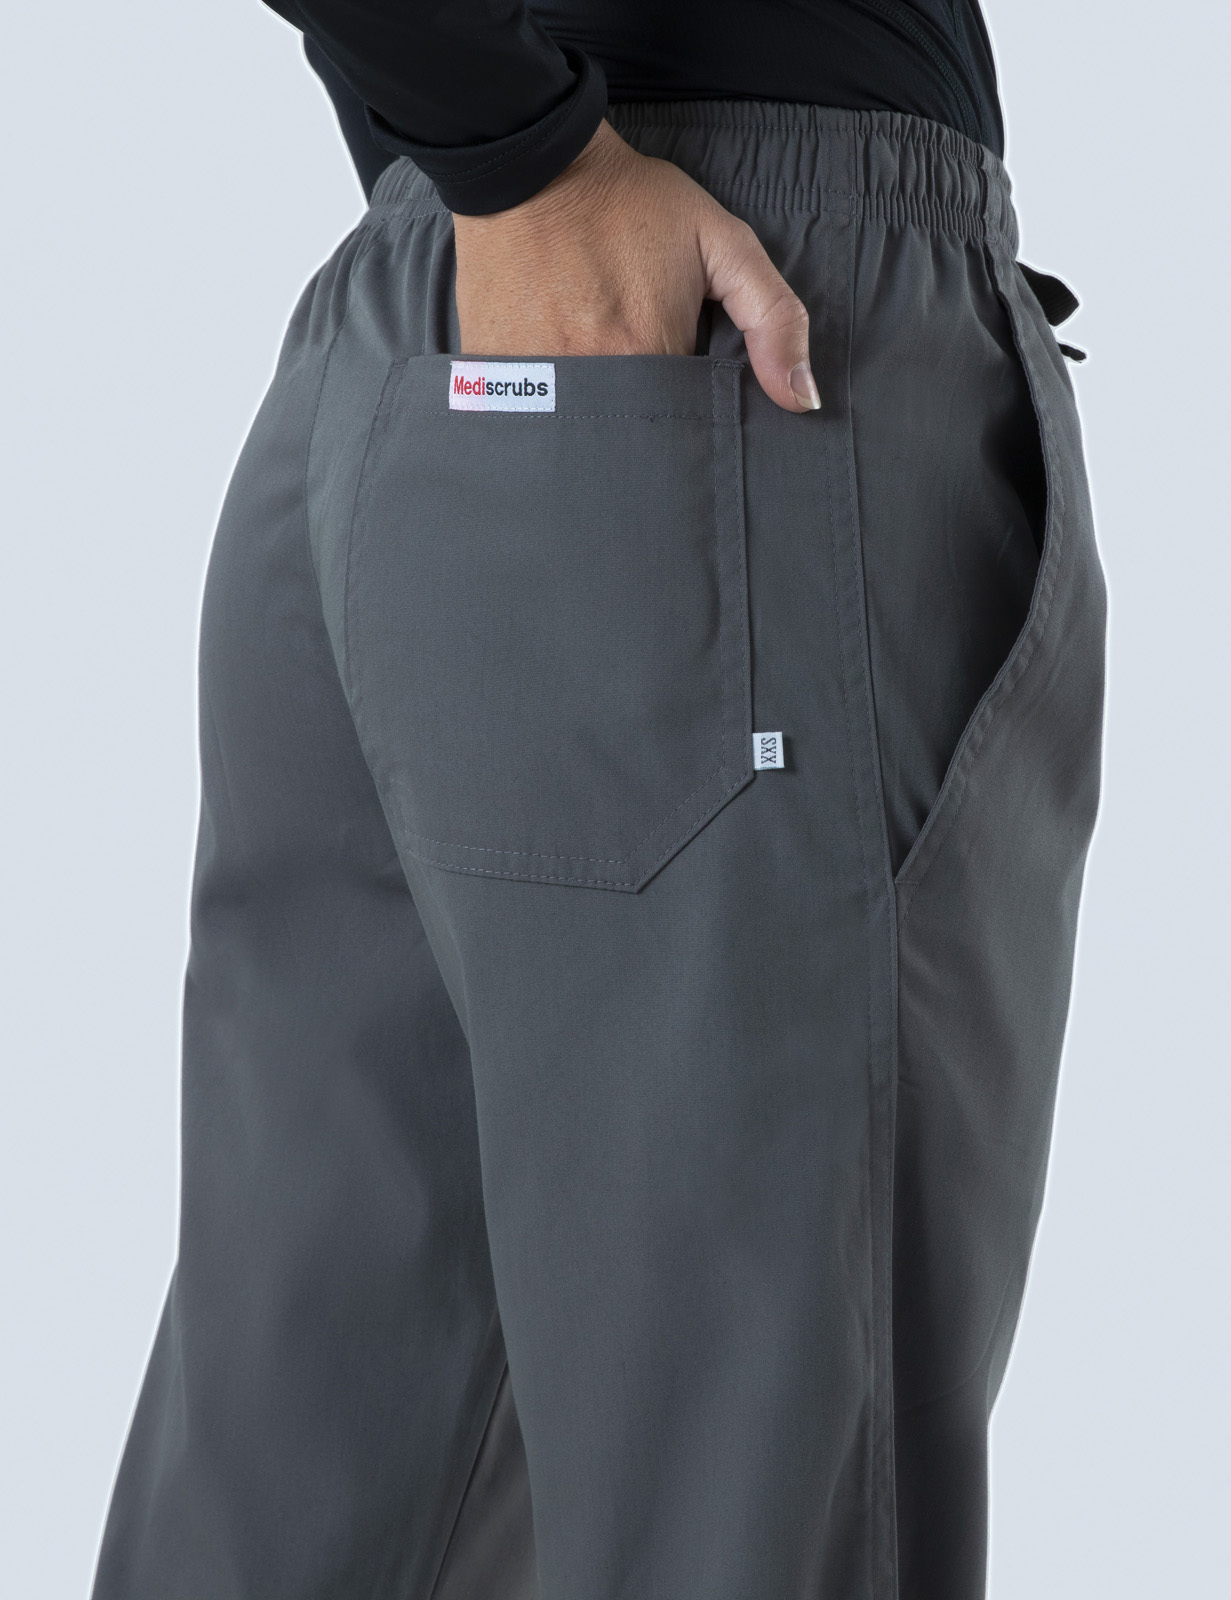 Women's Regular Cut Pants - Steel Grey - 3X Large - Tall - 2